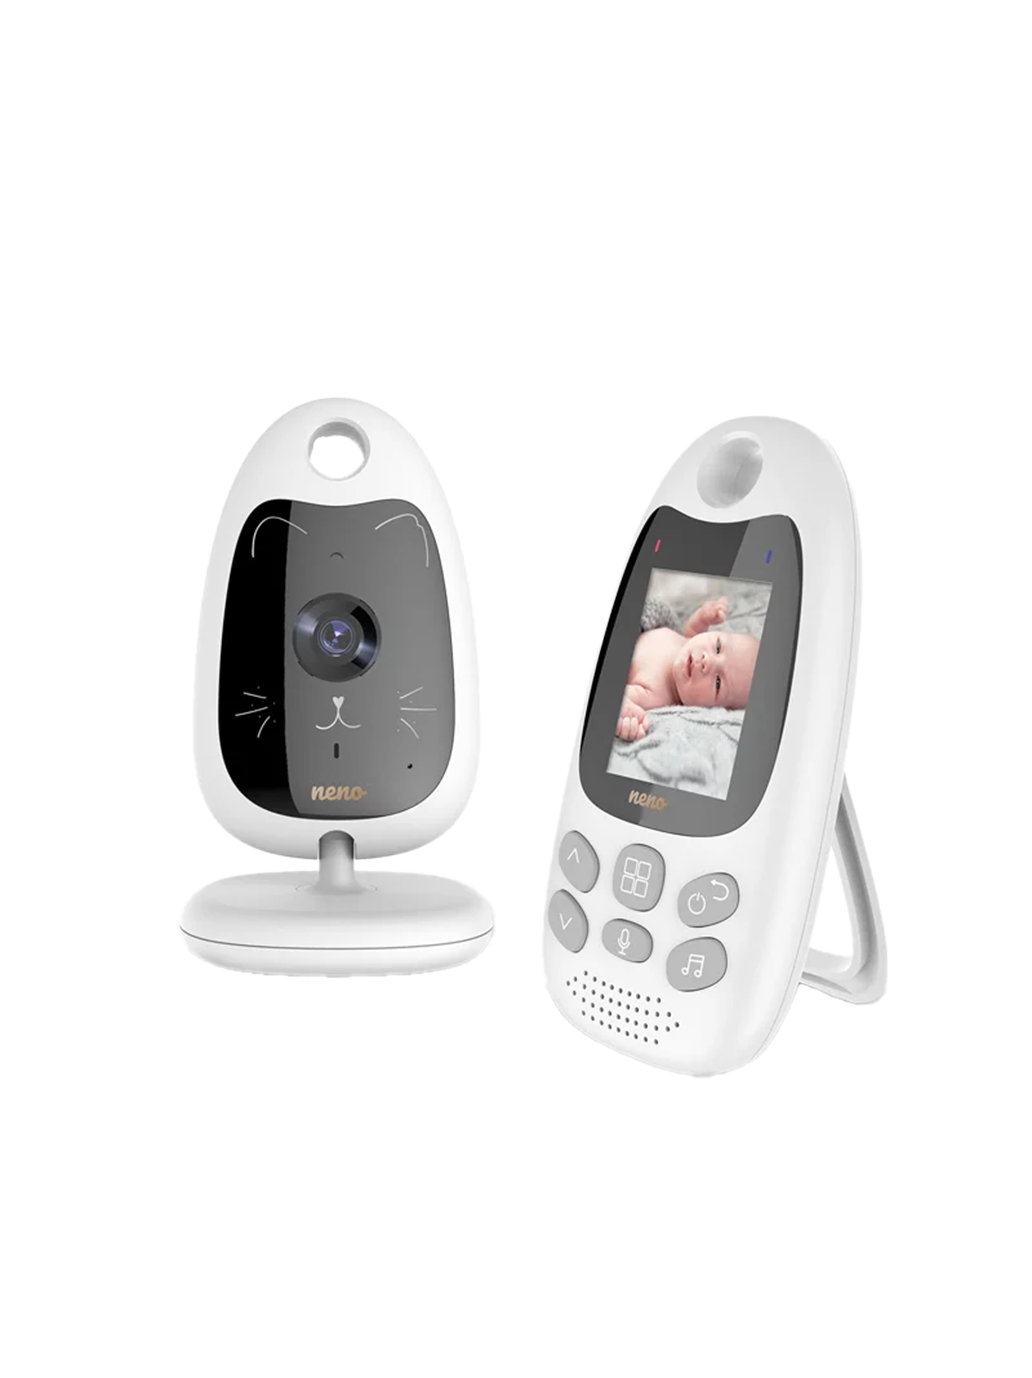 Neno Gato baby monitor with a wireless receiver